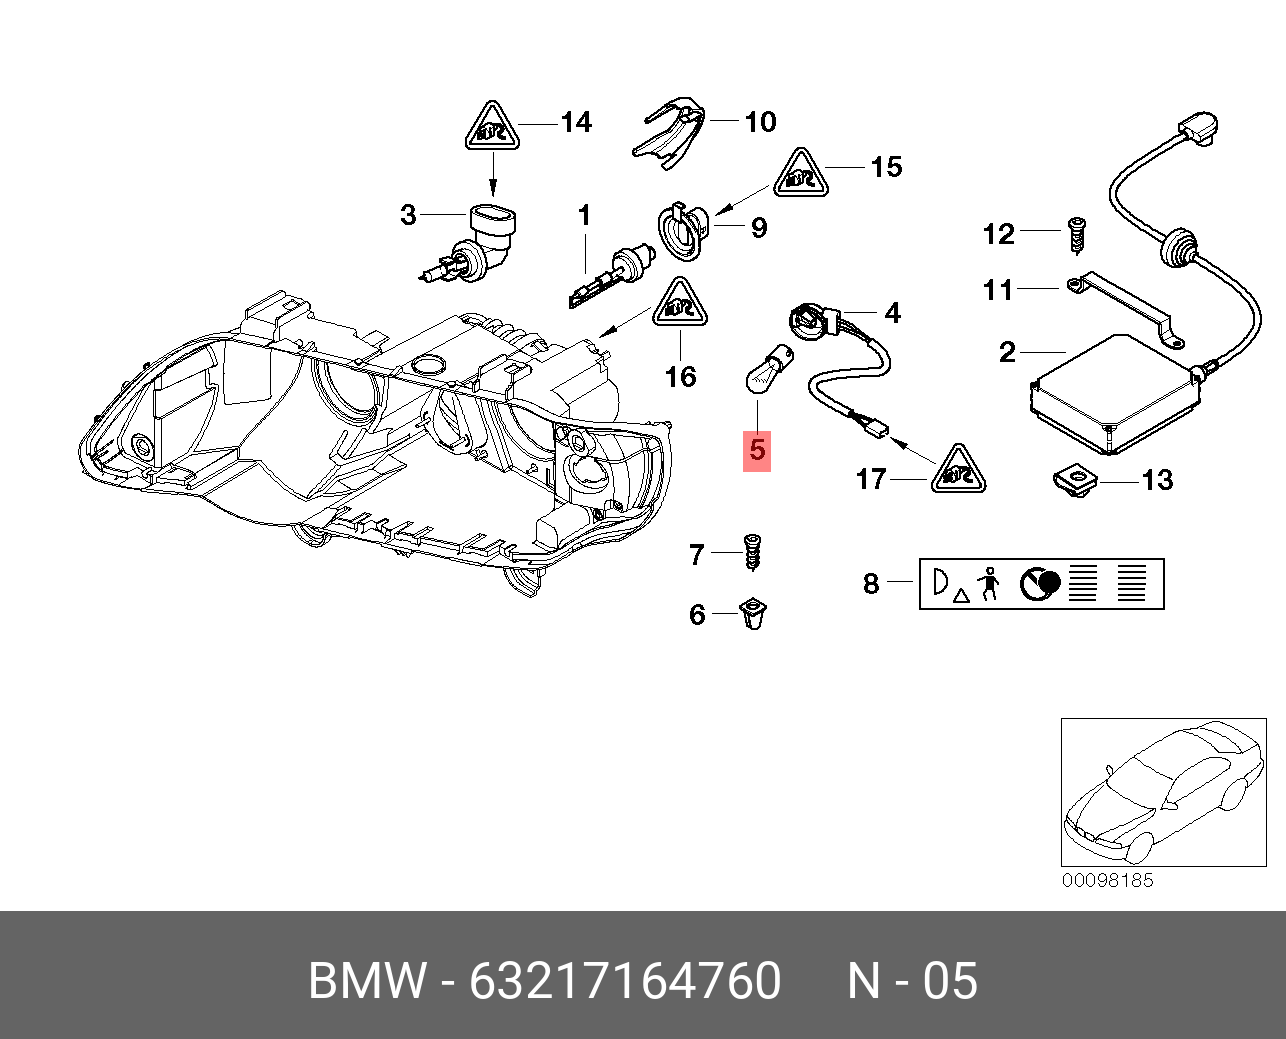 63 12 6. Кольцо лампы Xenon BMW x5 e53. Схема фары БМВ Х 5 е70. Схема фары БМВ х5. BMW x5 e53 лампа поворотника артикул.